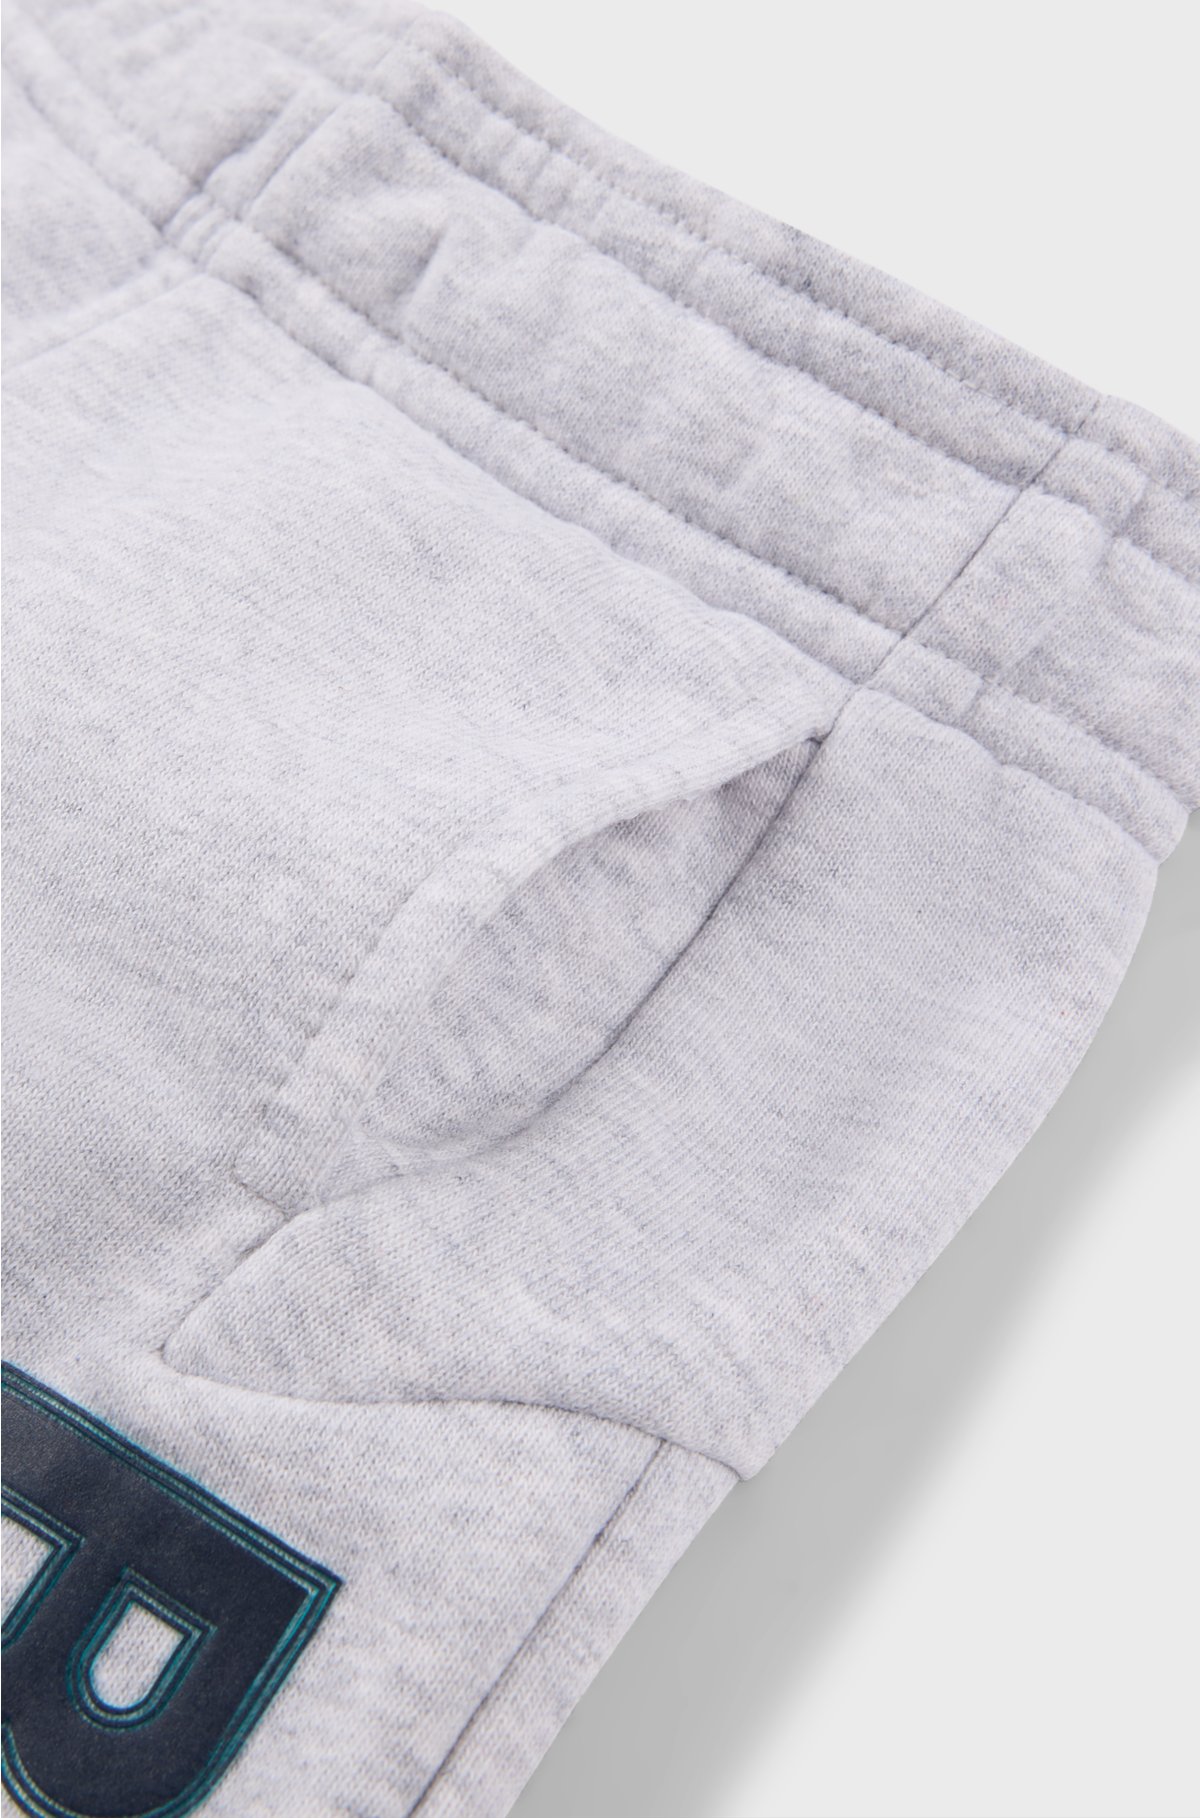 Kids' fleece shorts with HD logo print, Light Grey